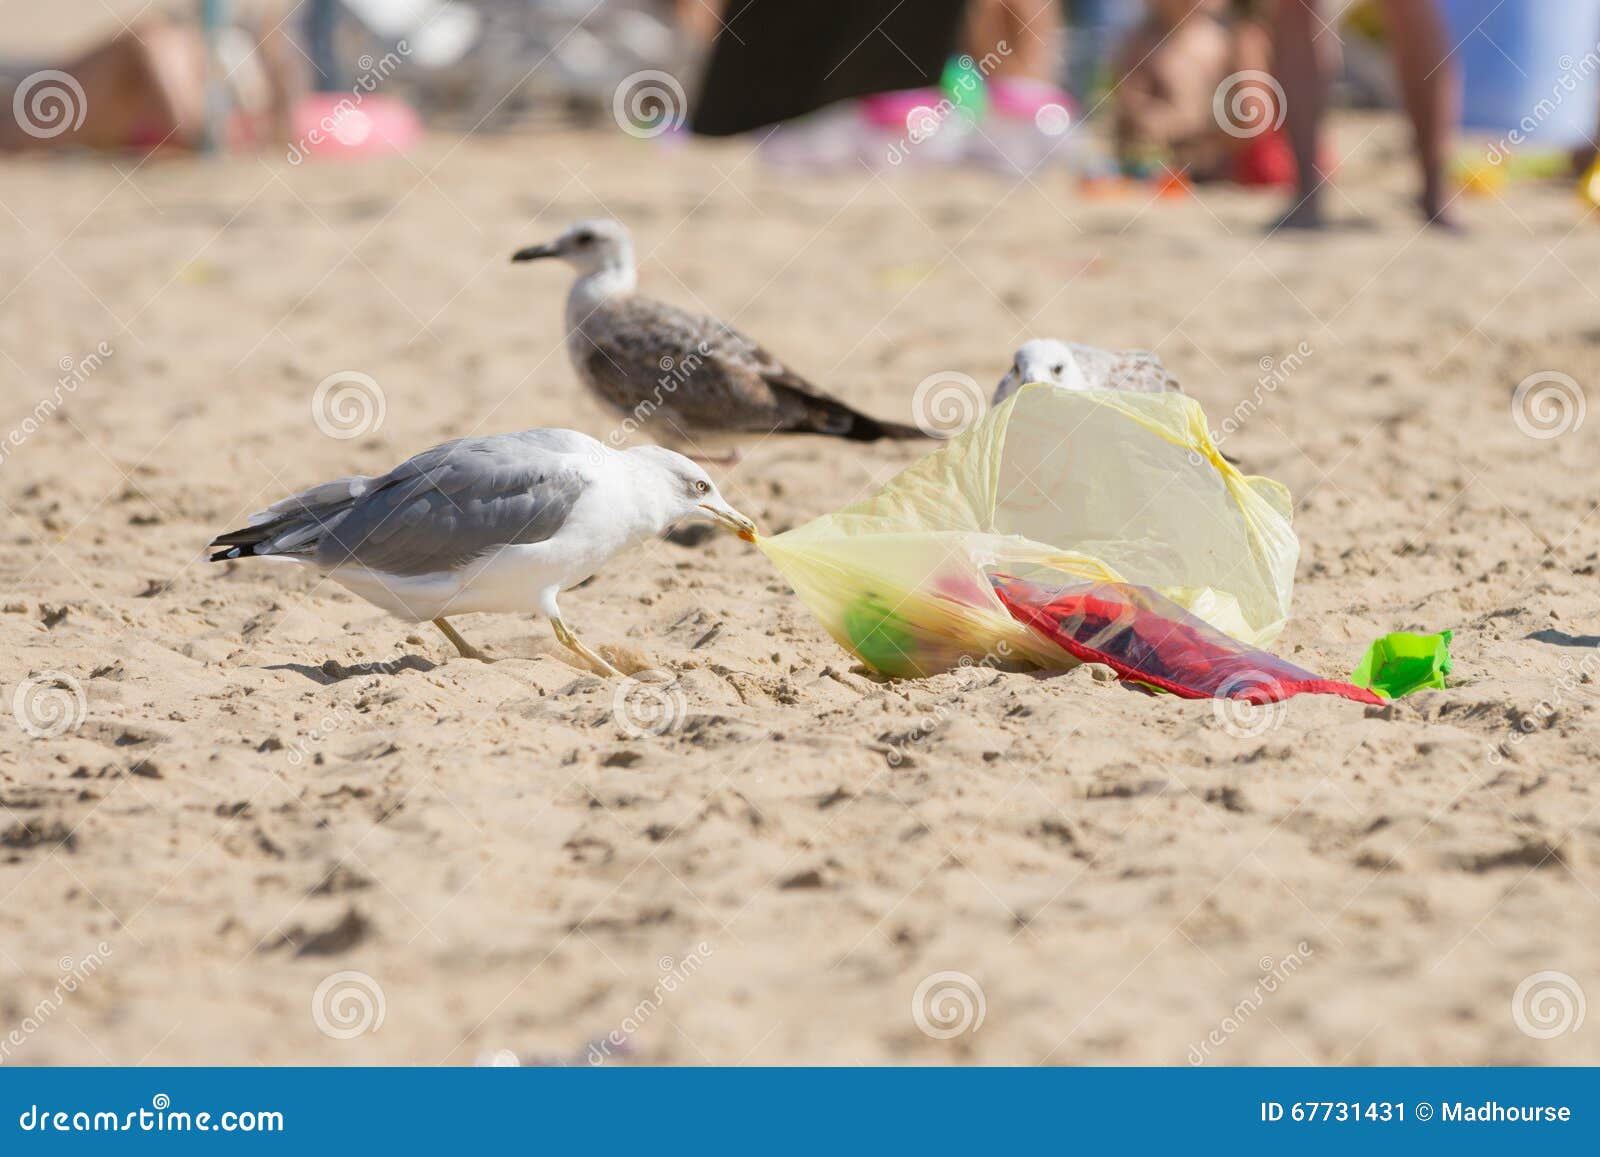 gulls on the beach seaside dragged a bag of food